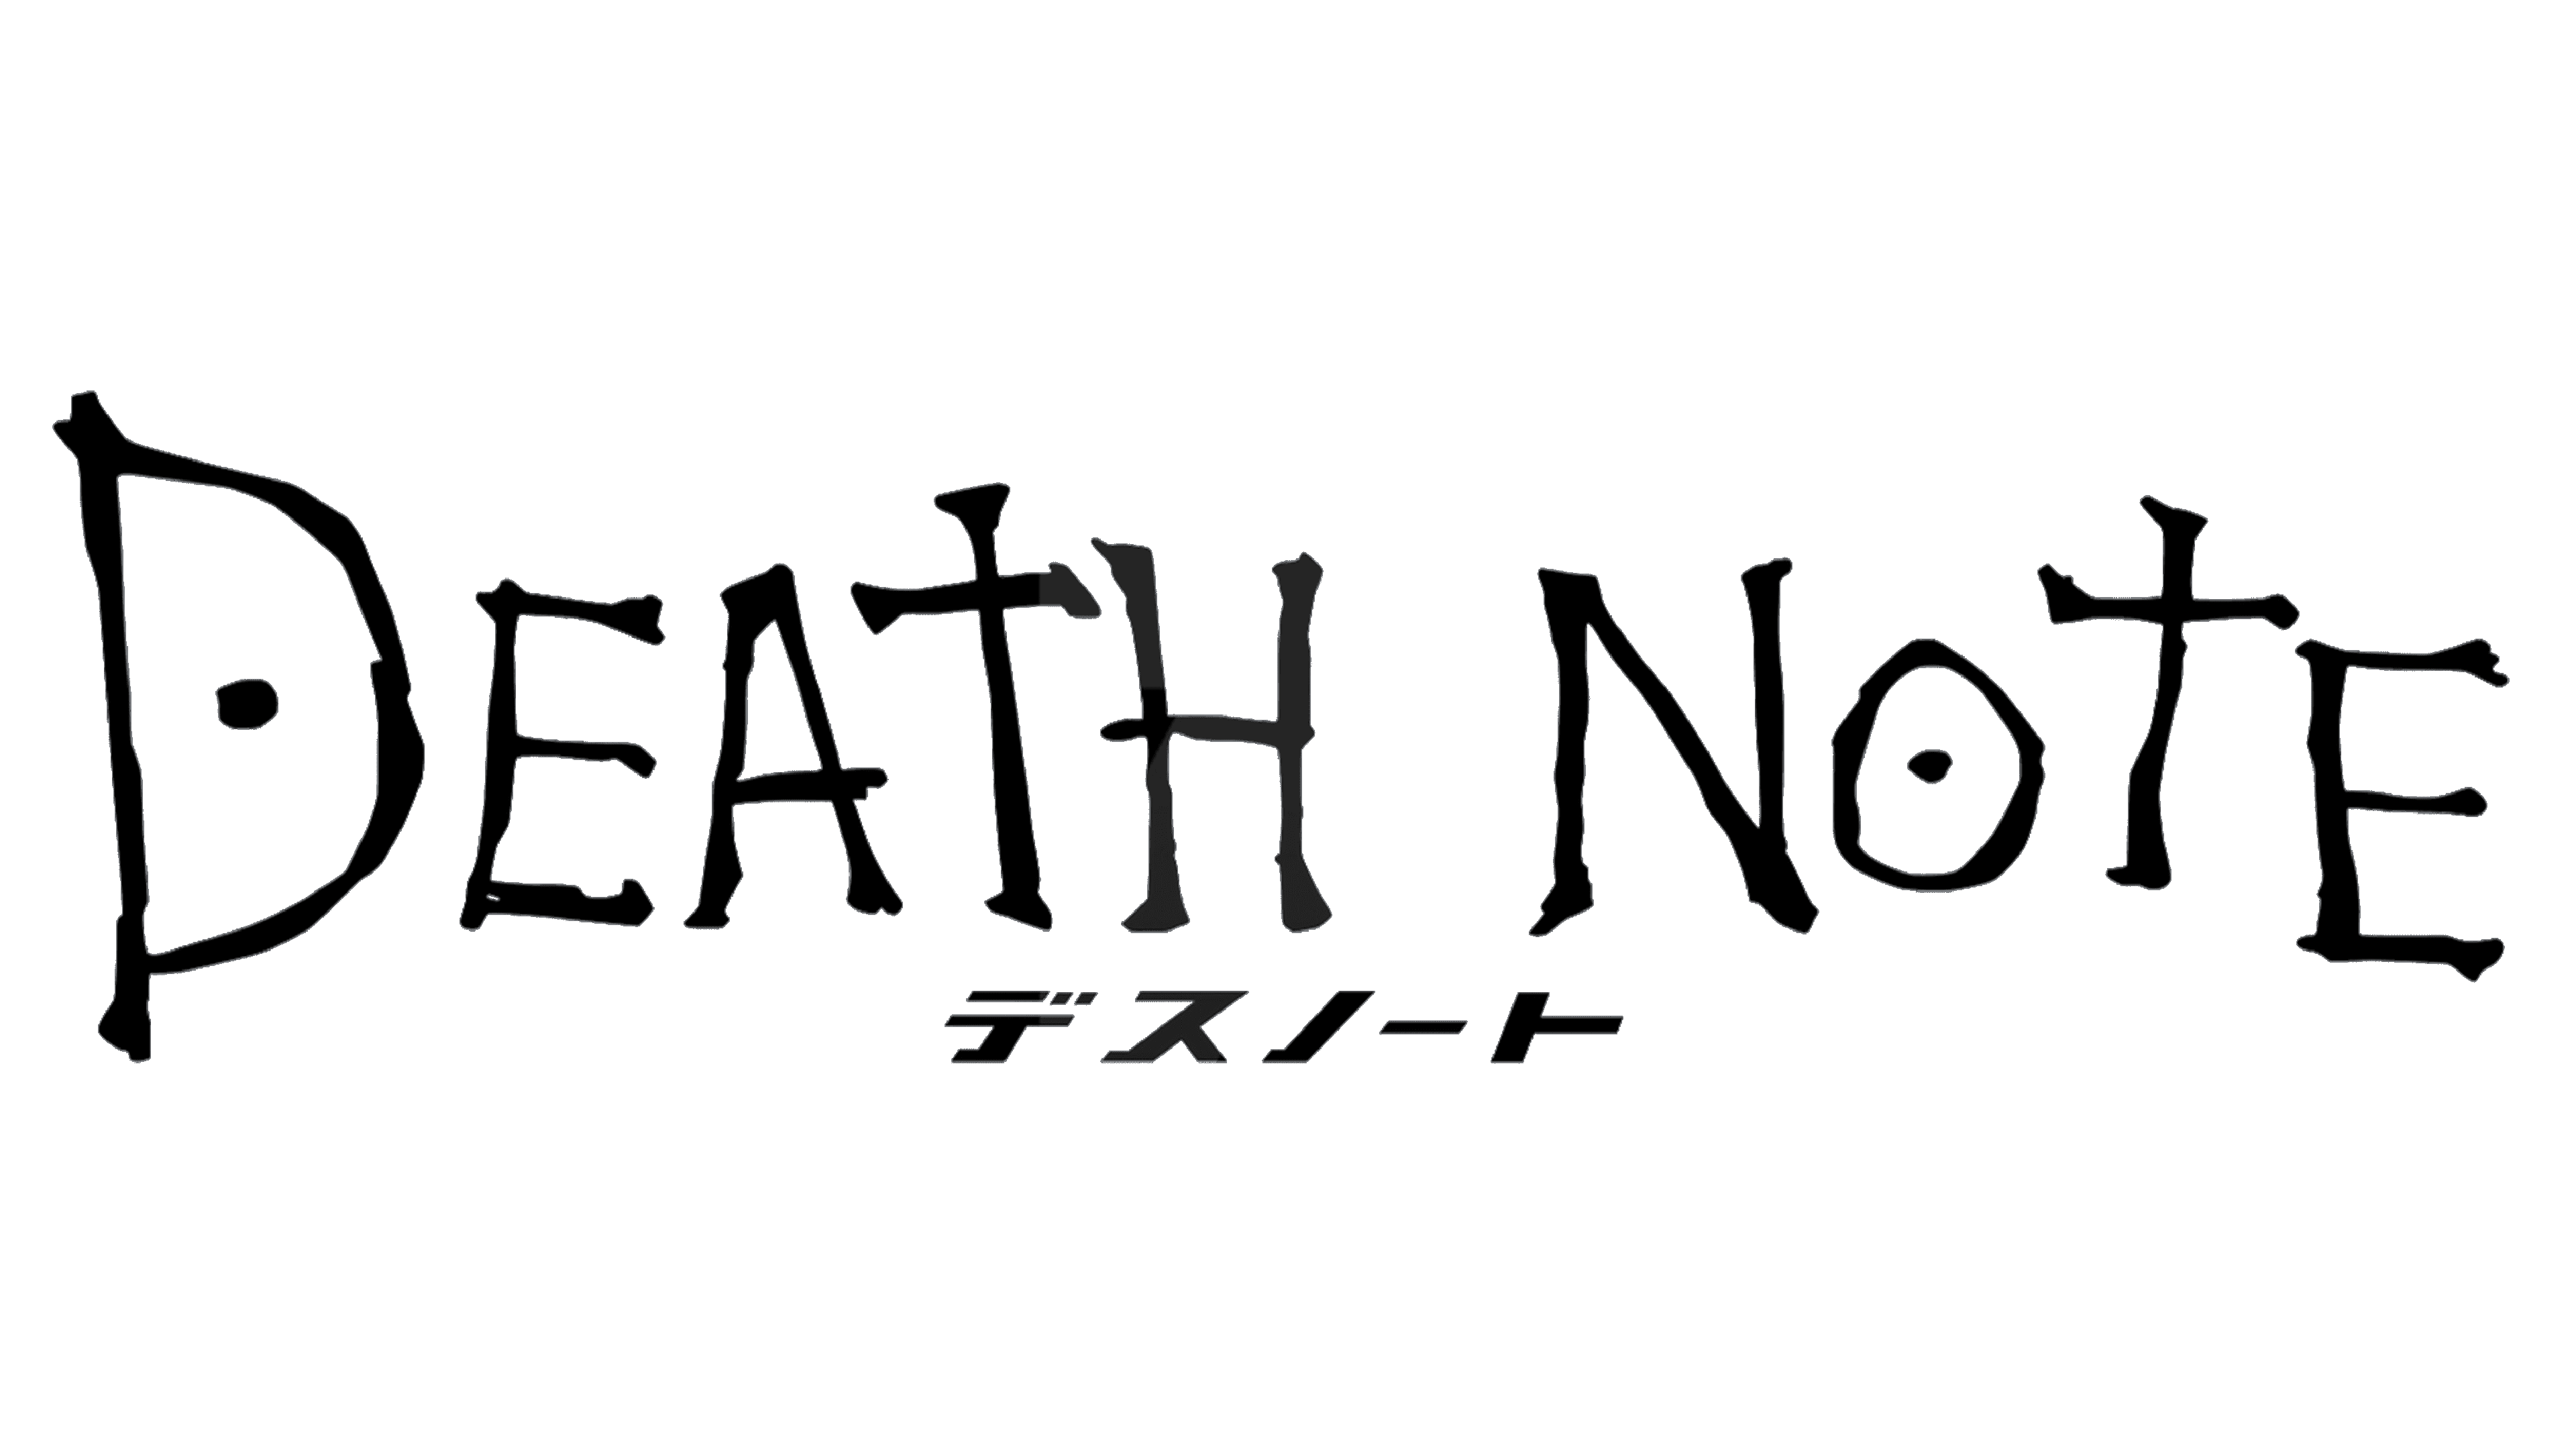 death note logo